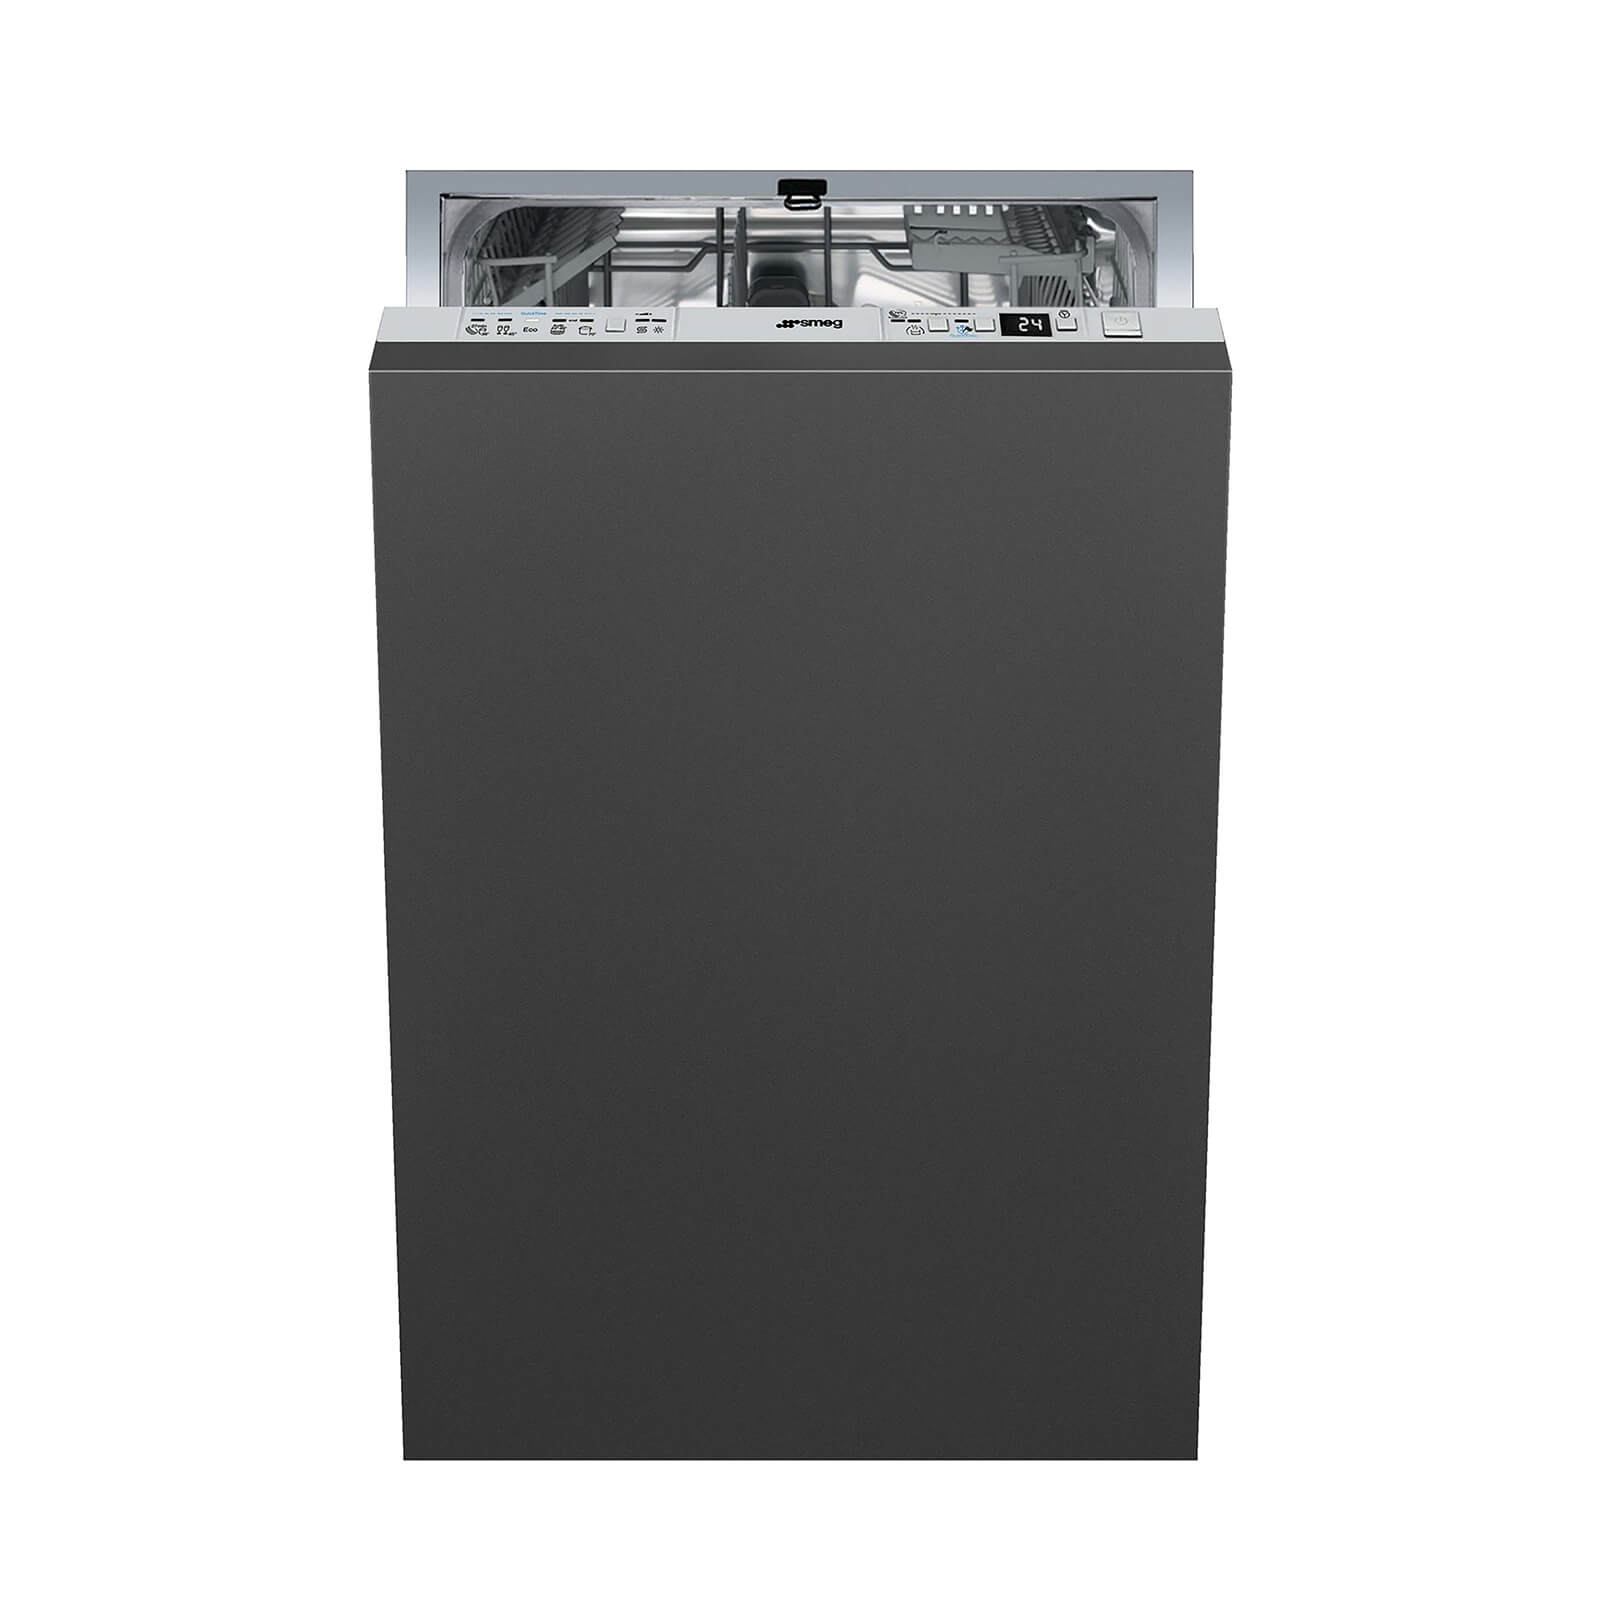 Smeg DI410T 45cm Intergrated Slimline Dishwasher - Silver